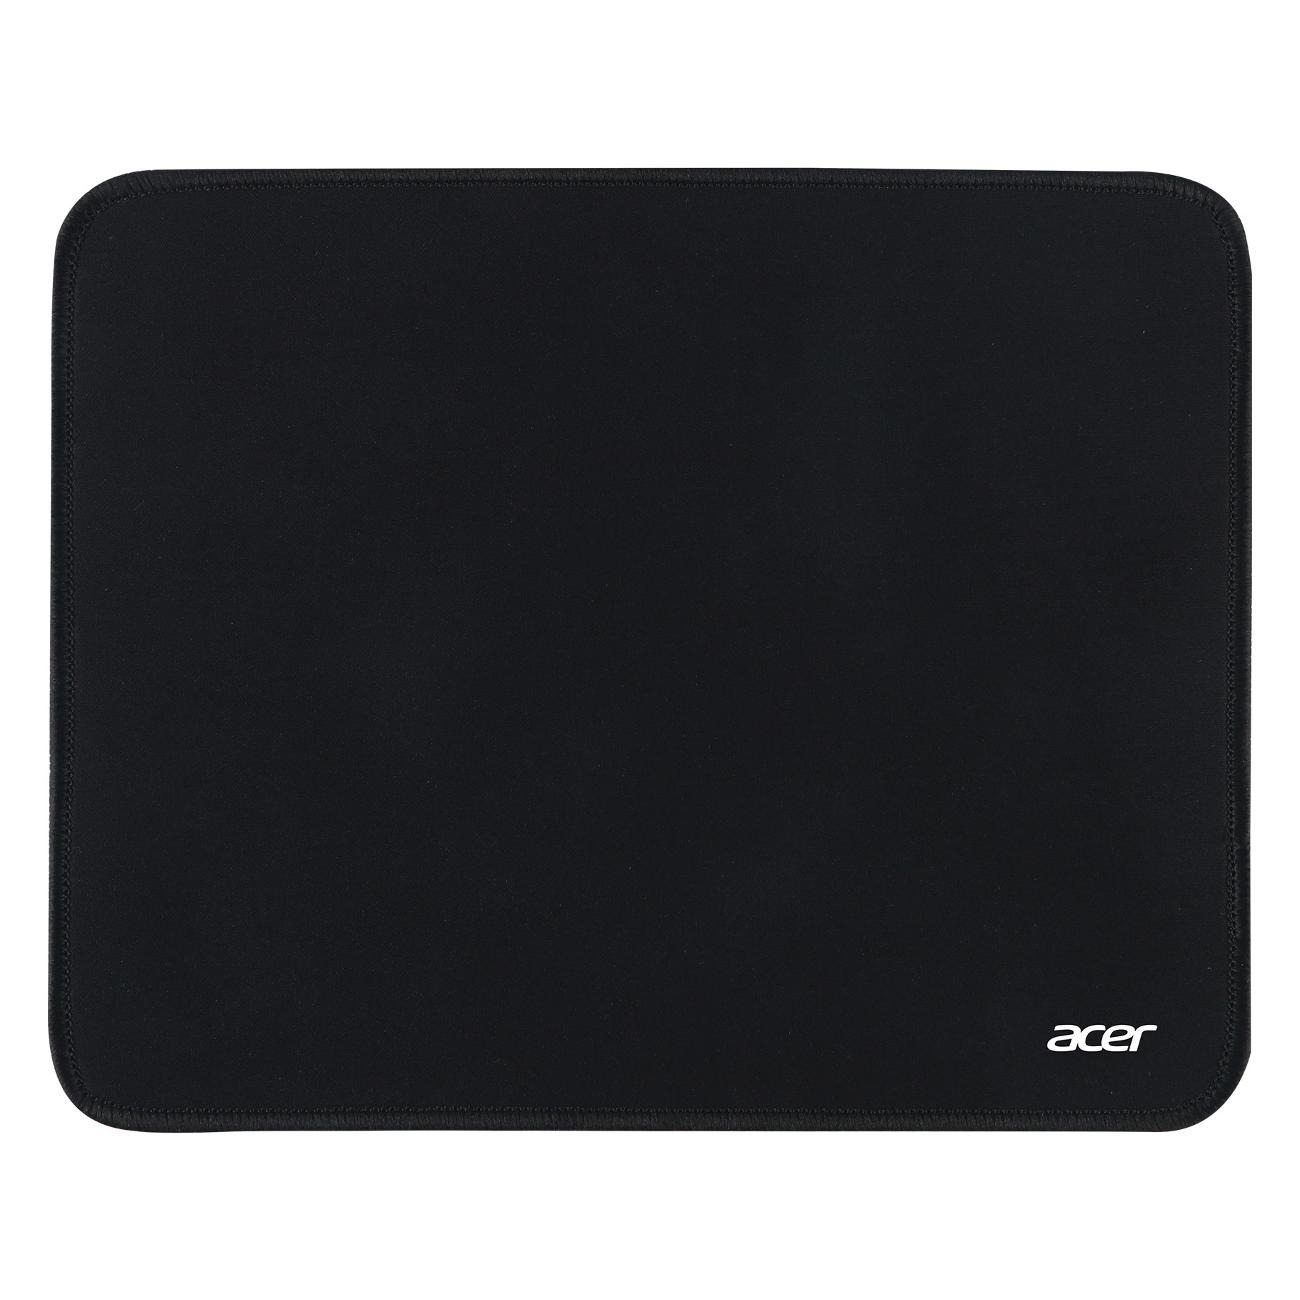 Коврик для мыши Acer omp211 черный 350x280x3мм (zl.mspee.002) omp211 черный 350x280x3мм (zl.mspee.002) - фото 1